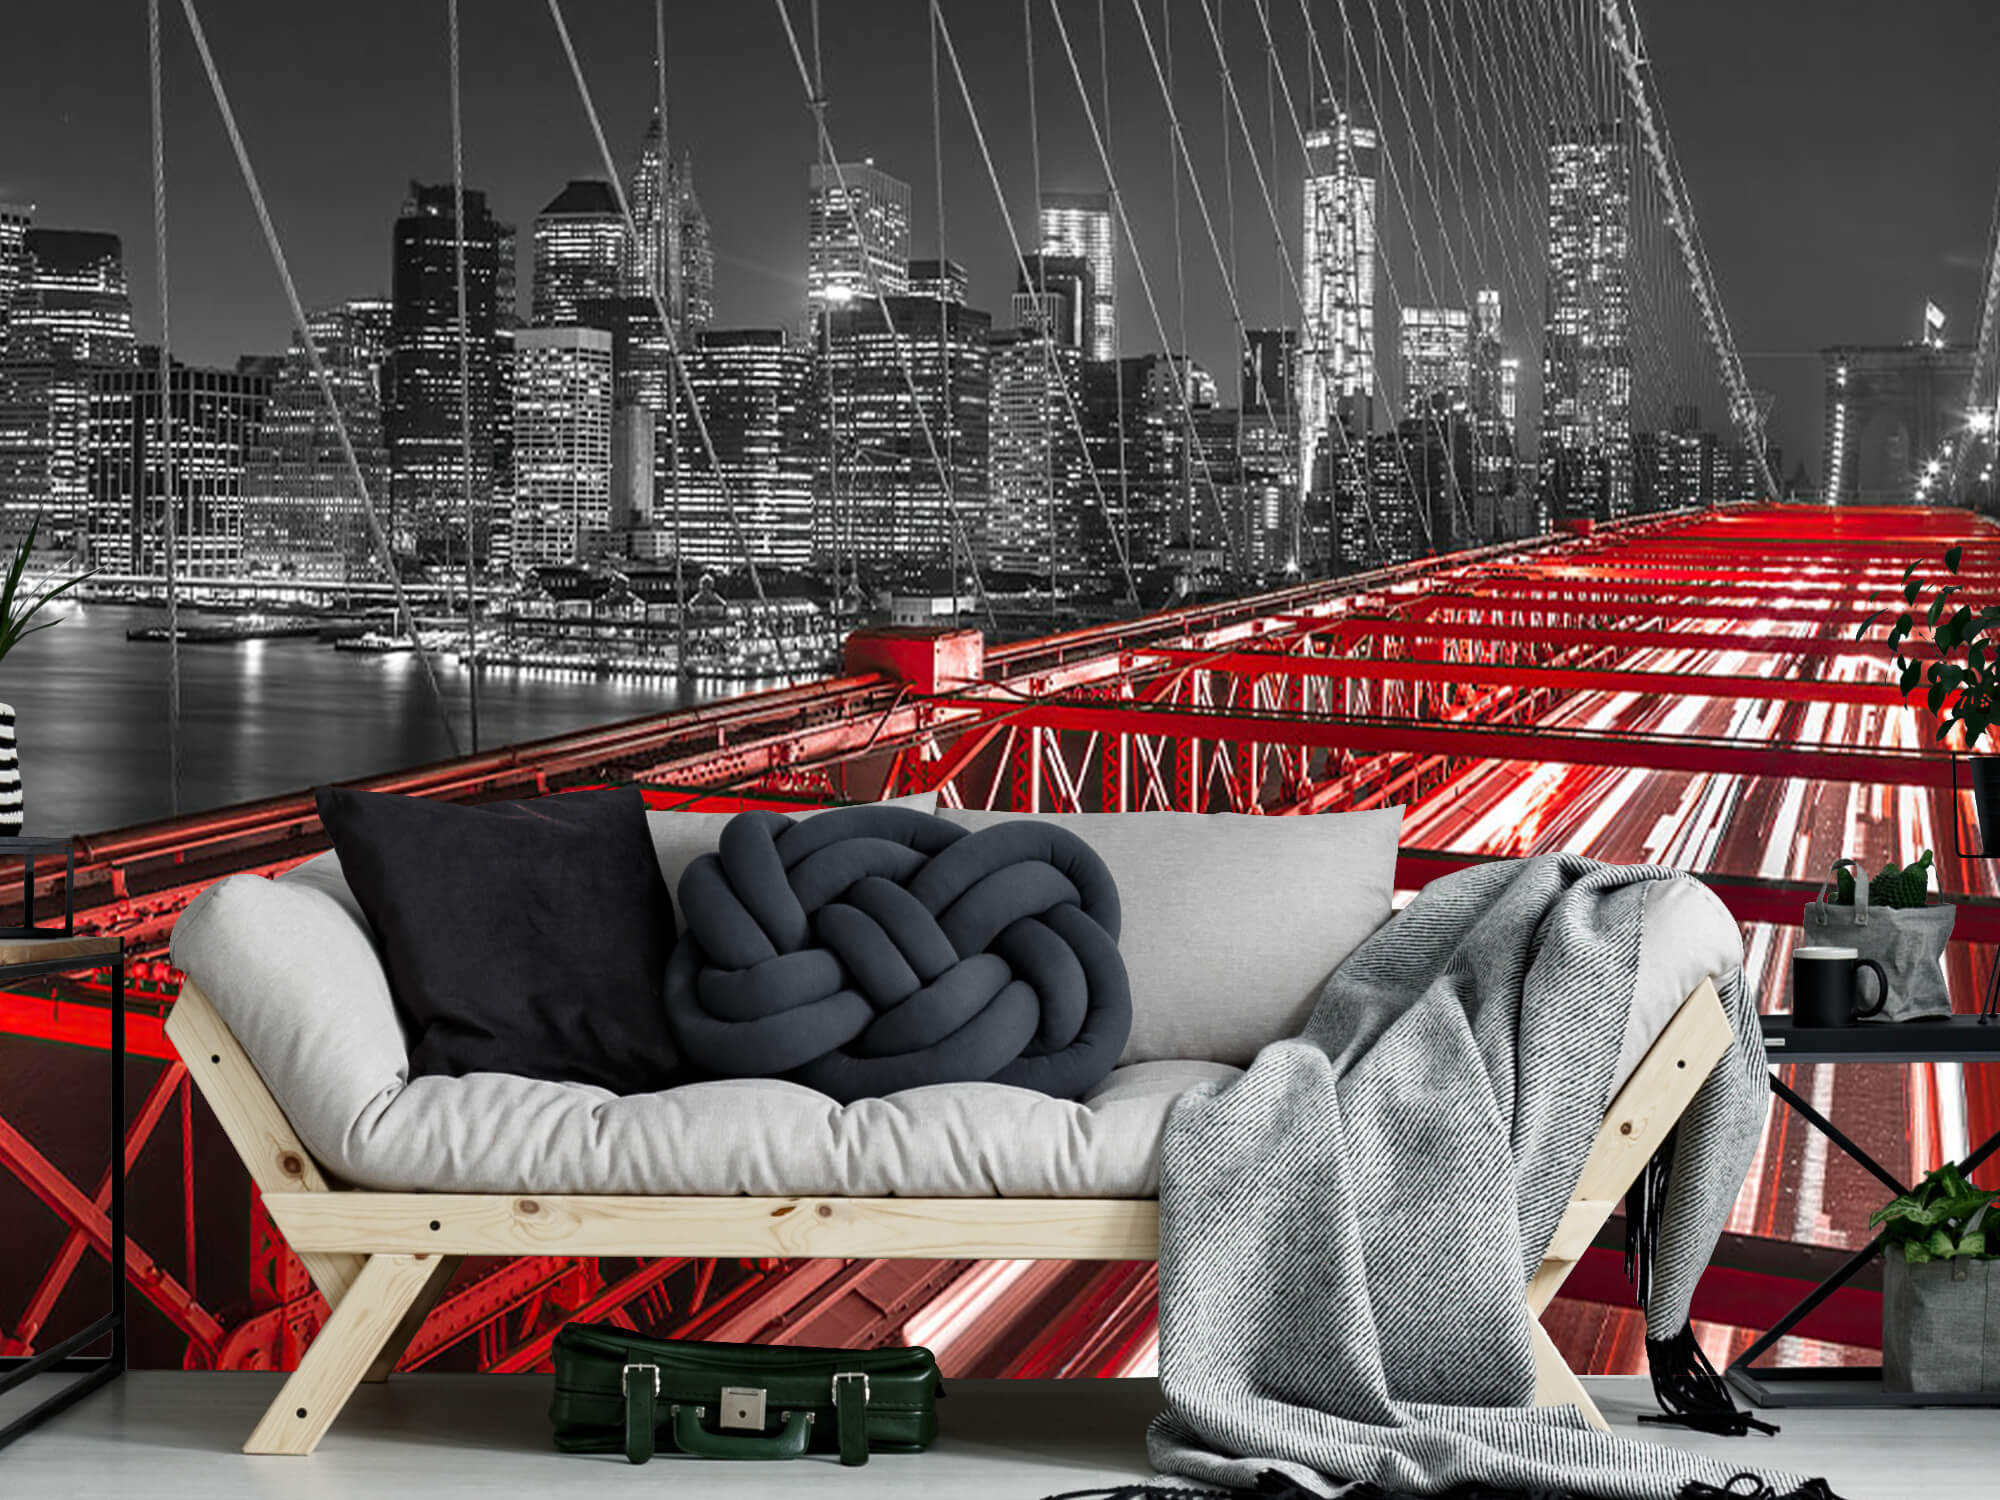  Pont de Brooklyn rouge 12